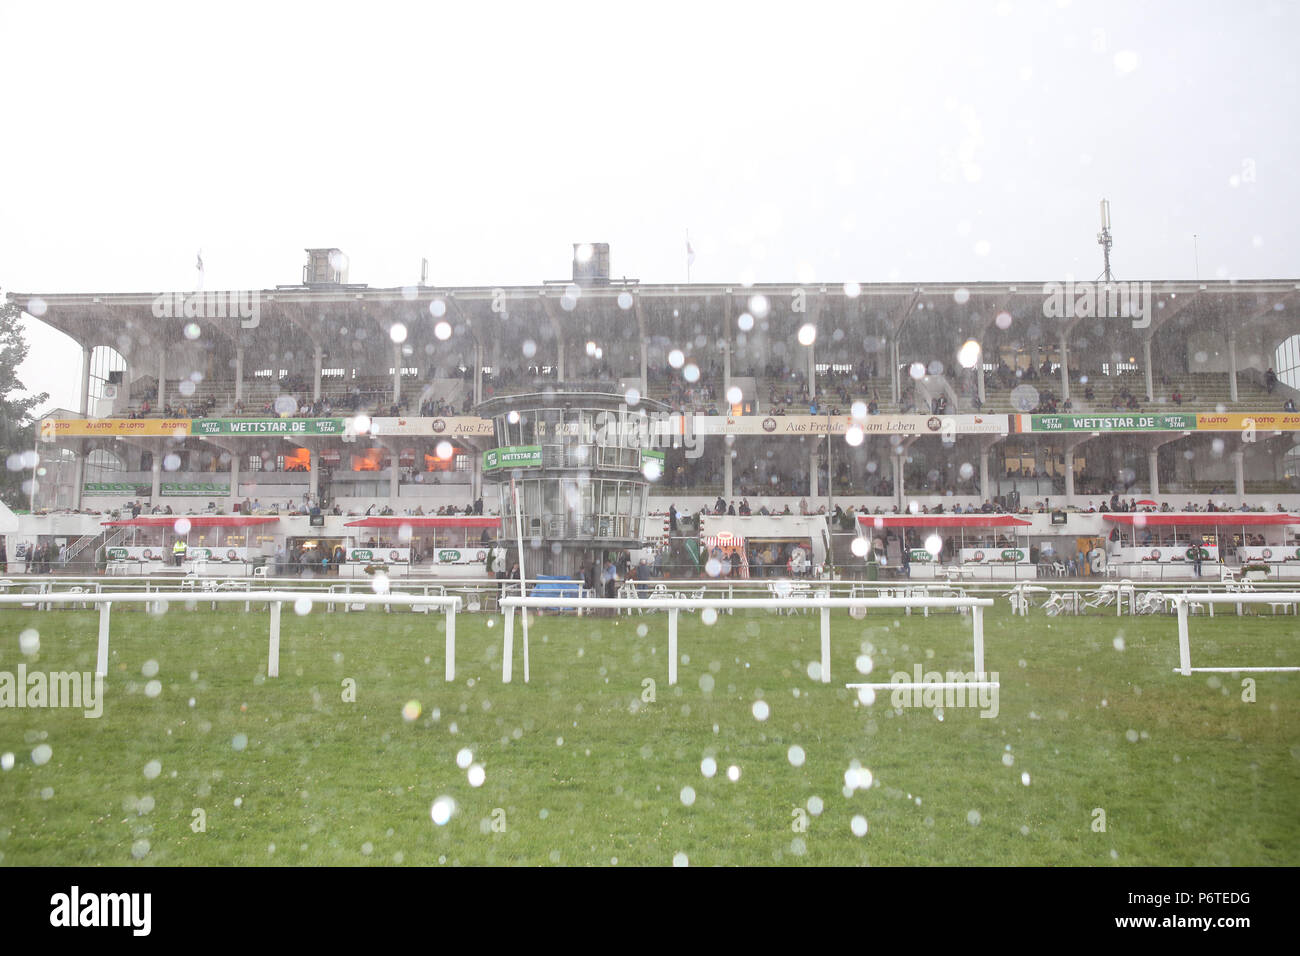 Hamburg, heavy rain shower goes down over the racecourse Stock Photo